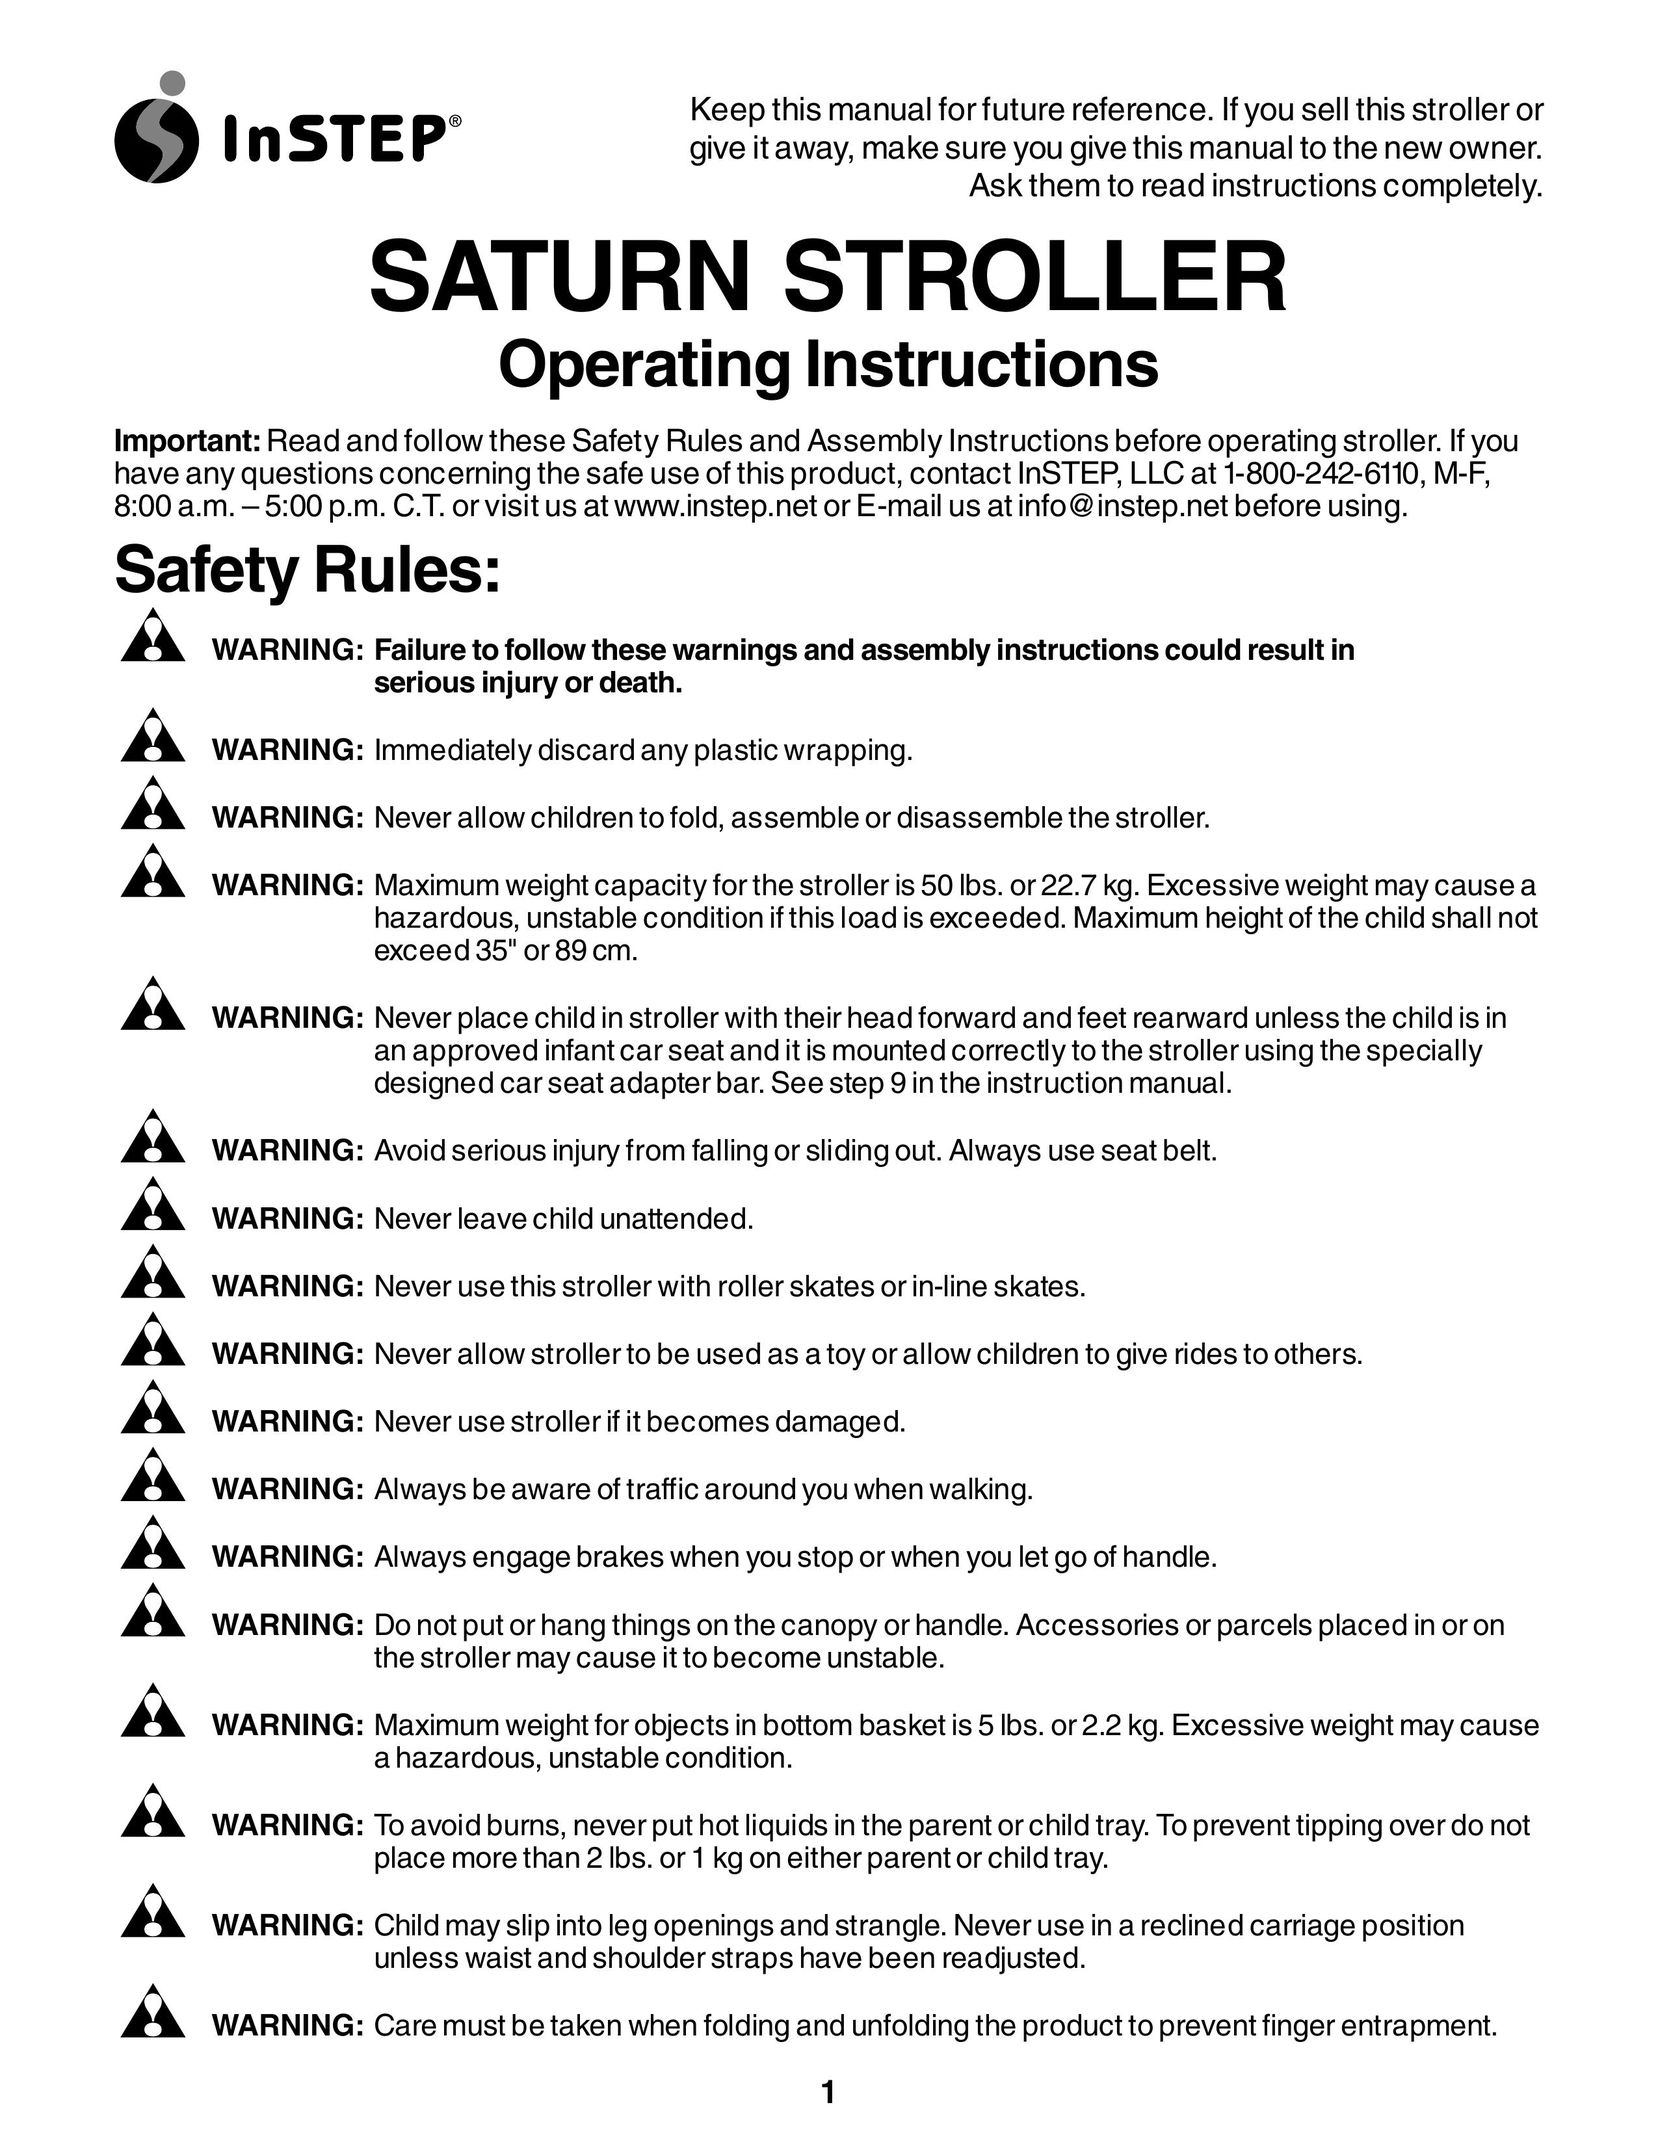 InStep SS100 Stroller User Manual